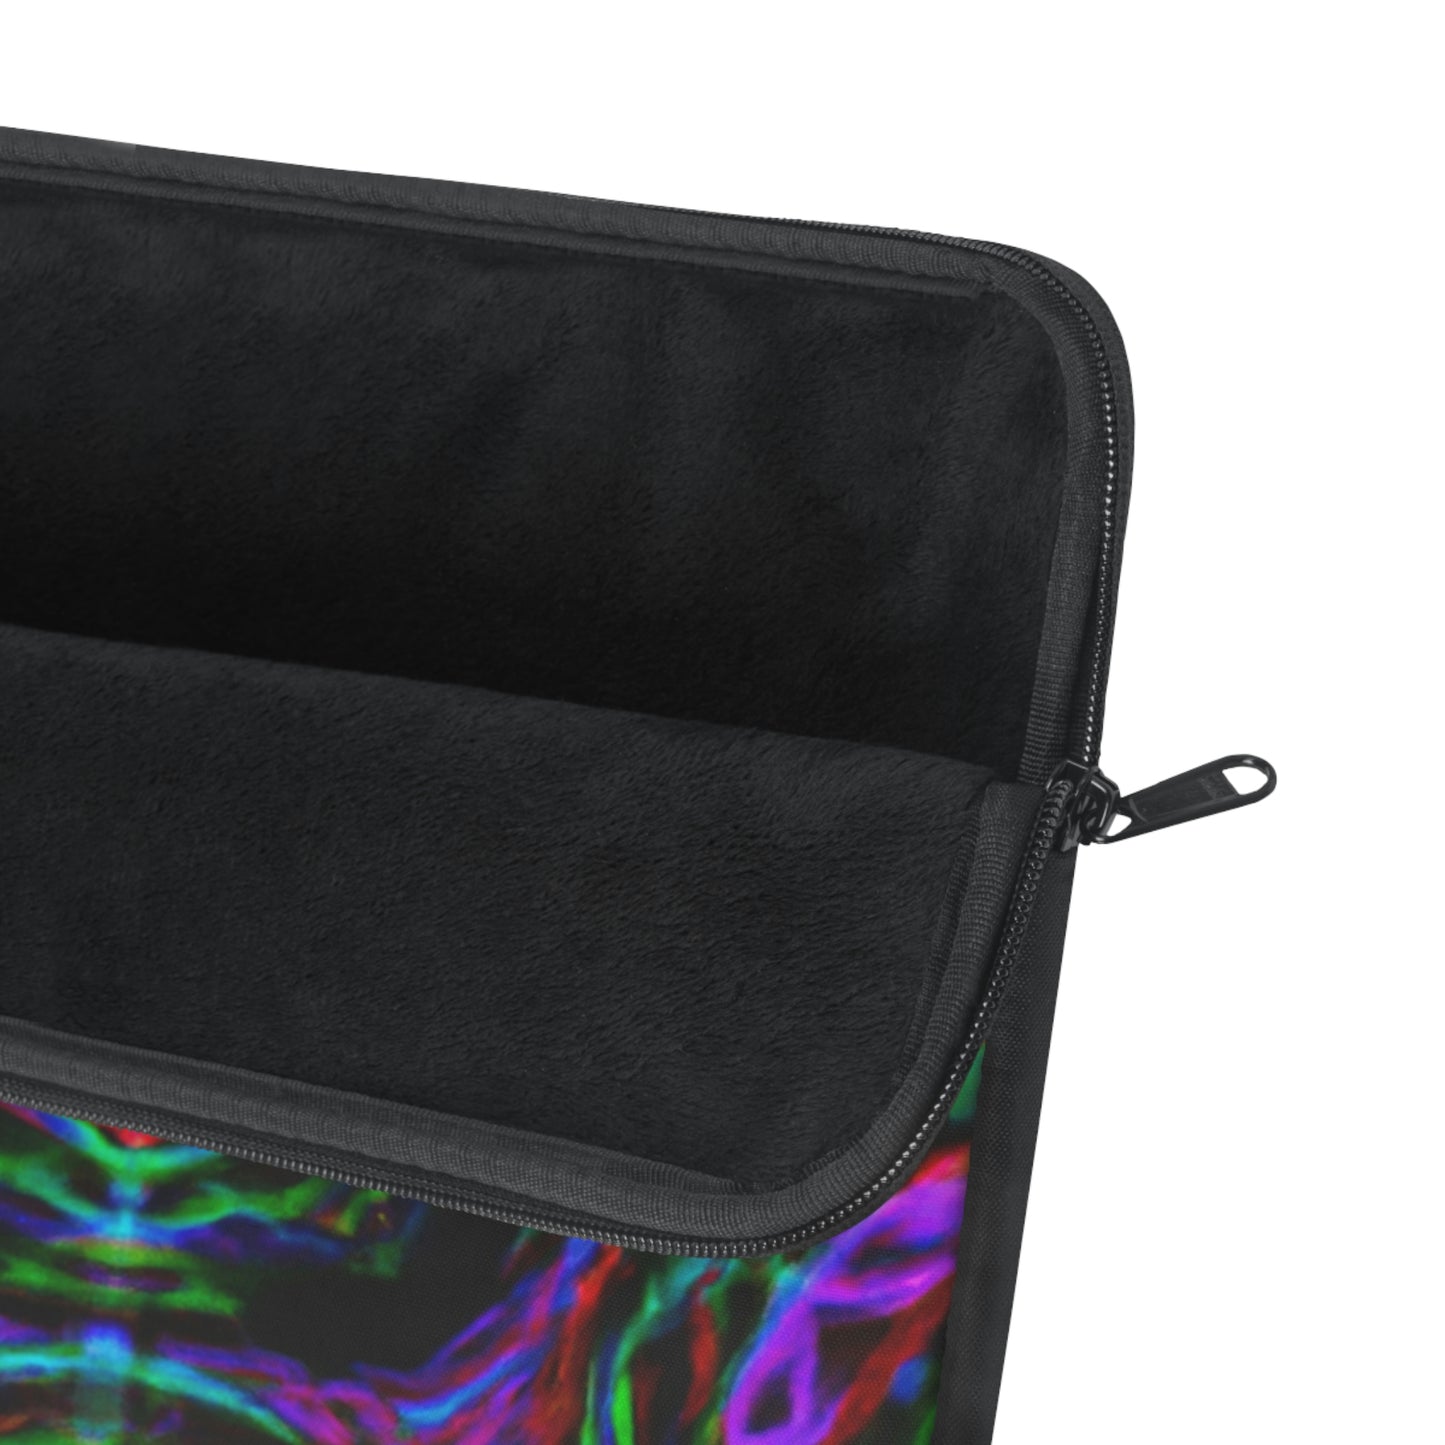 Tilly 'Yo-Yo' Johnson - Psychedelic Laptop Computer Sleeve Storage Case Bag